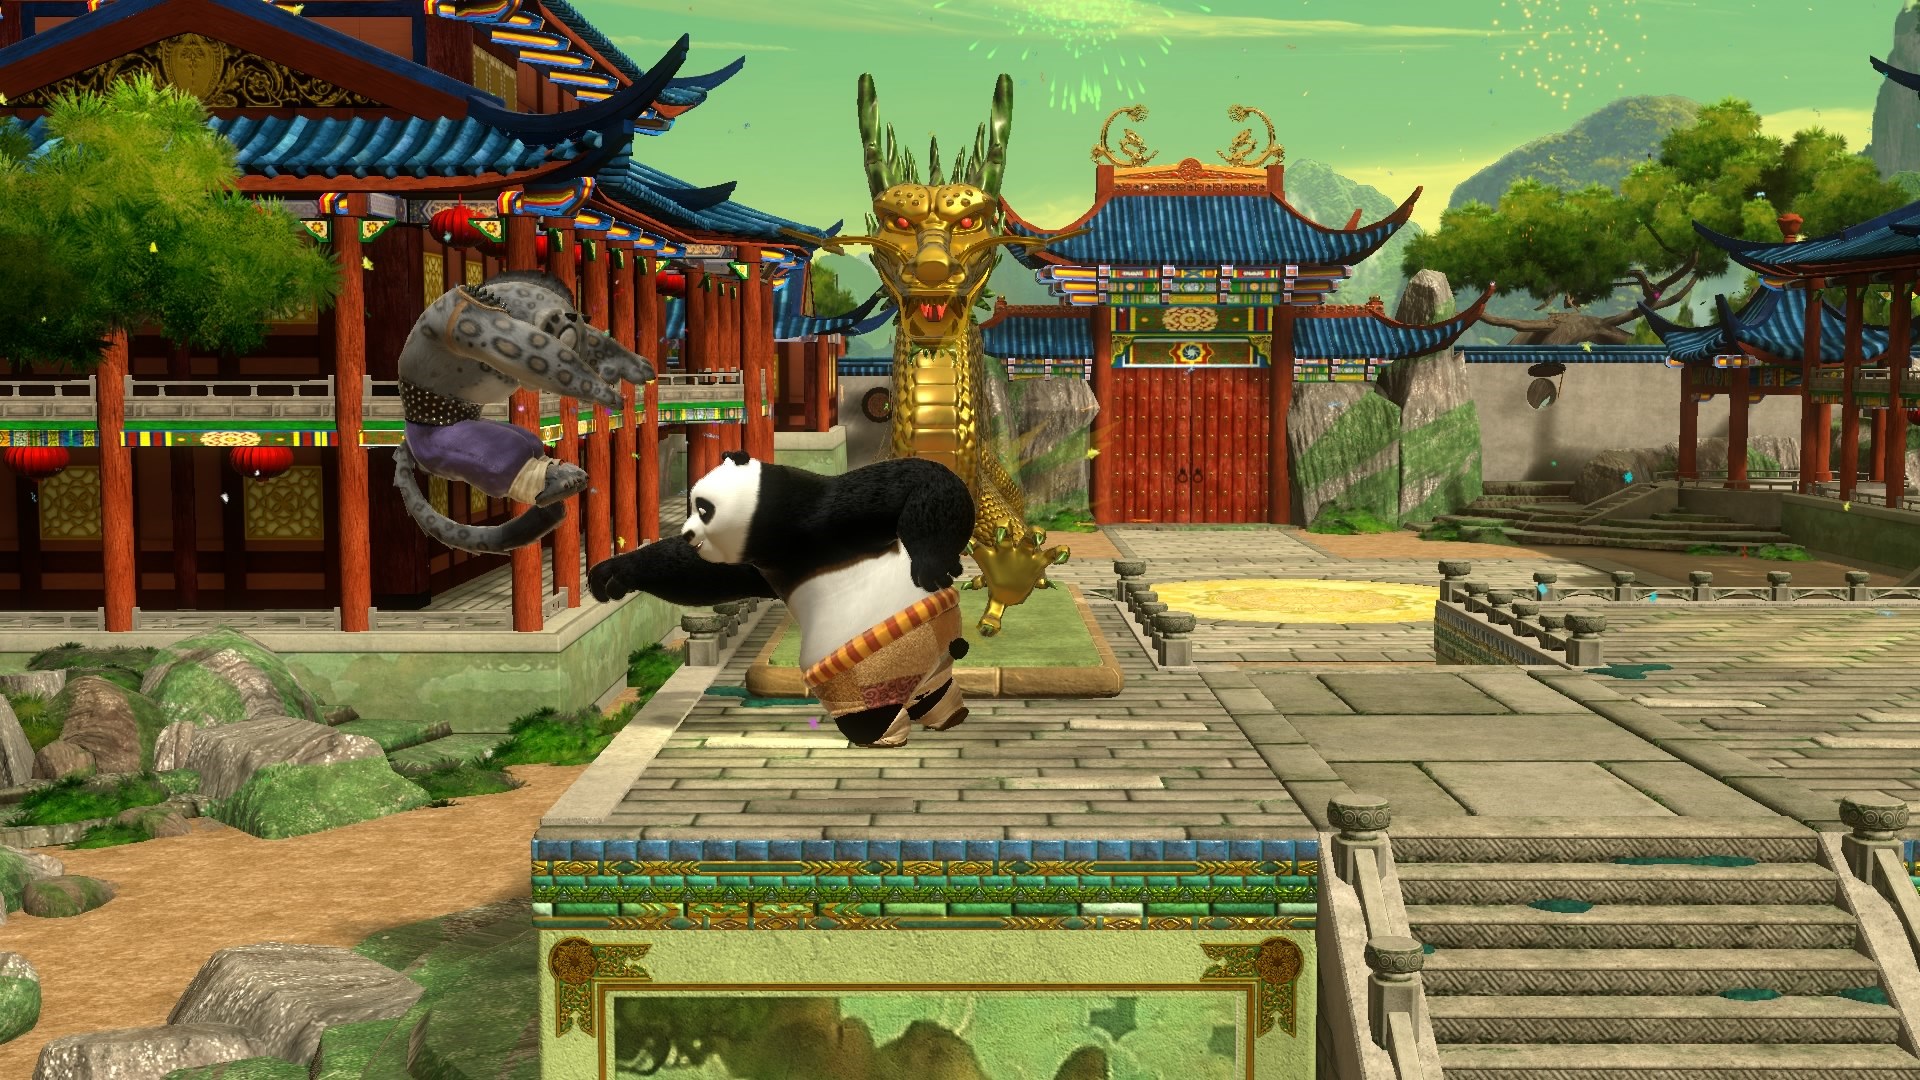 Nintendo panda leaked